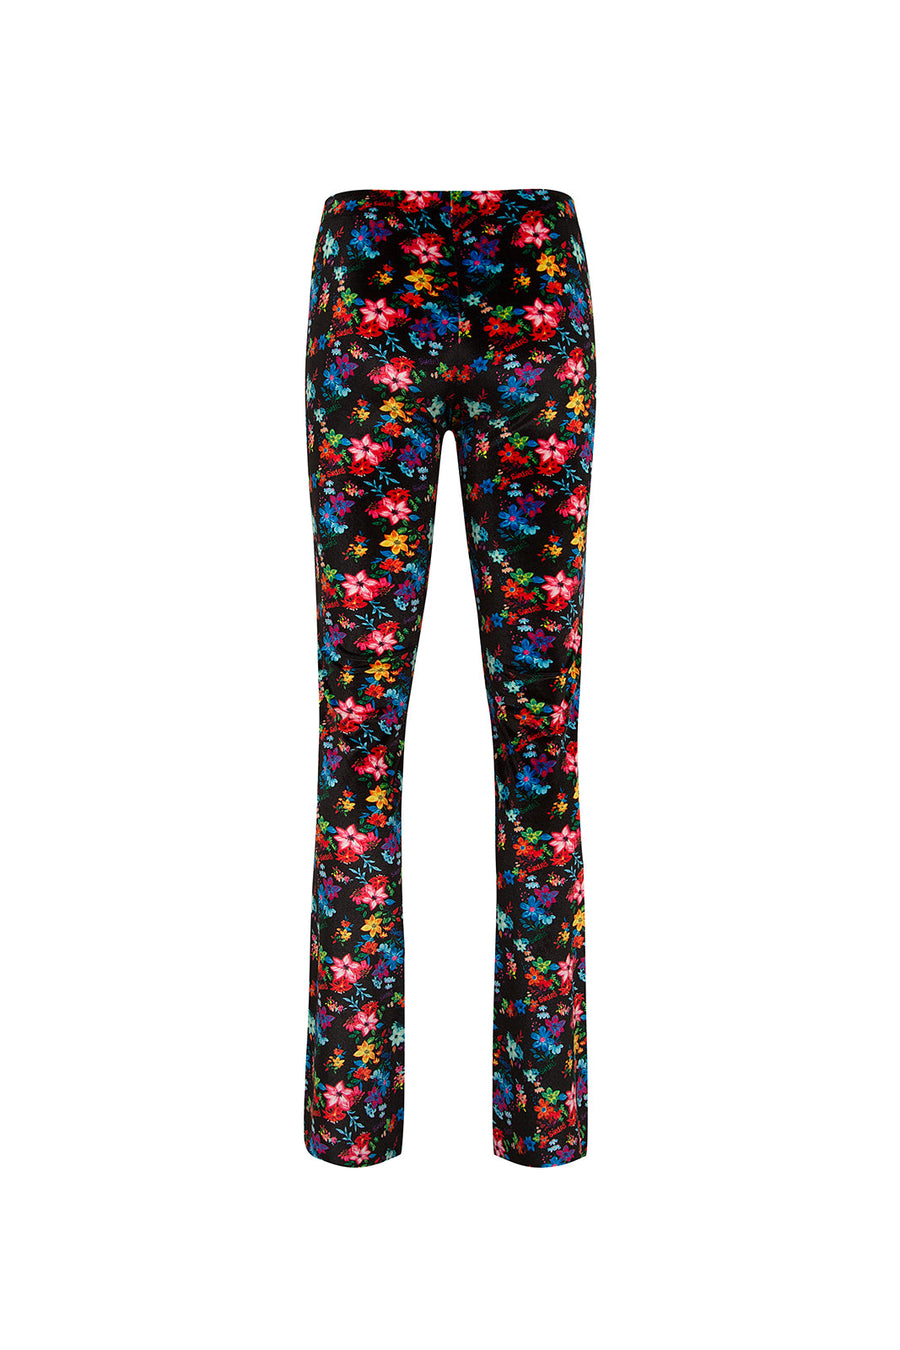 FLO - Floral printed low-rise pants